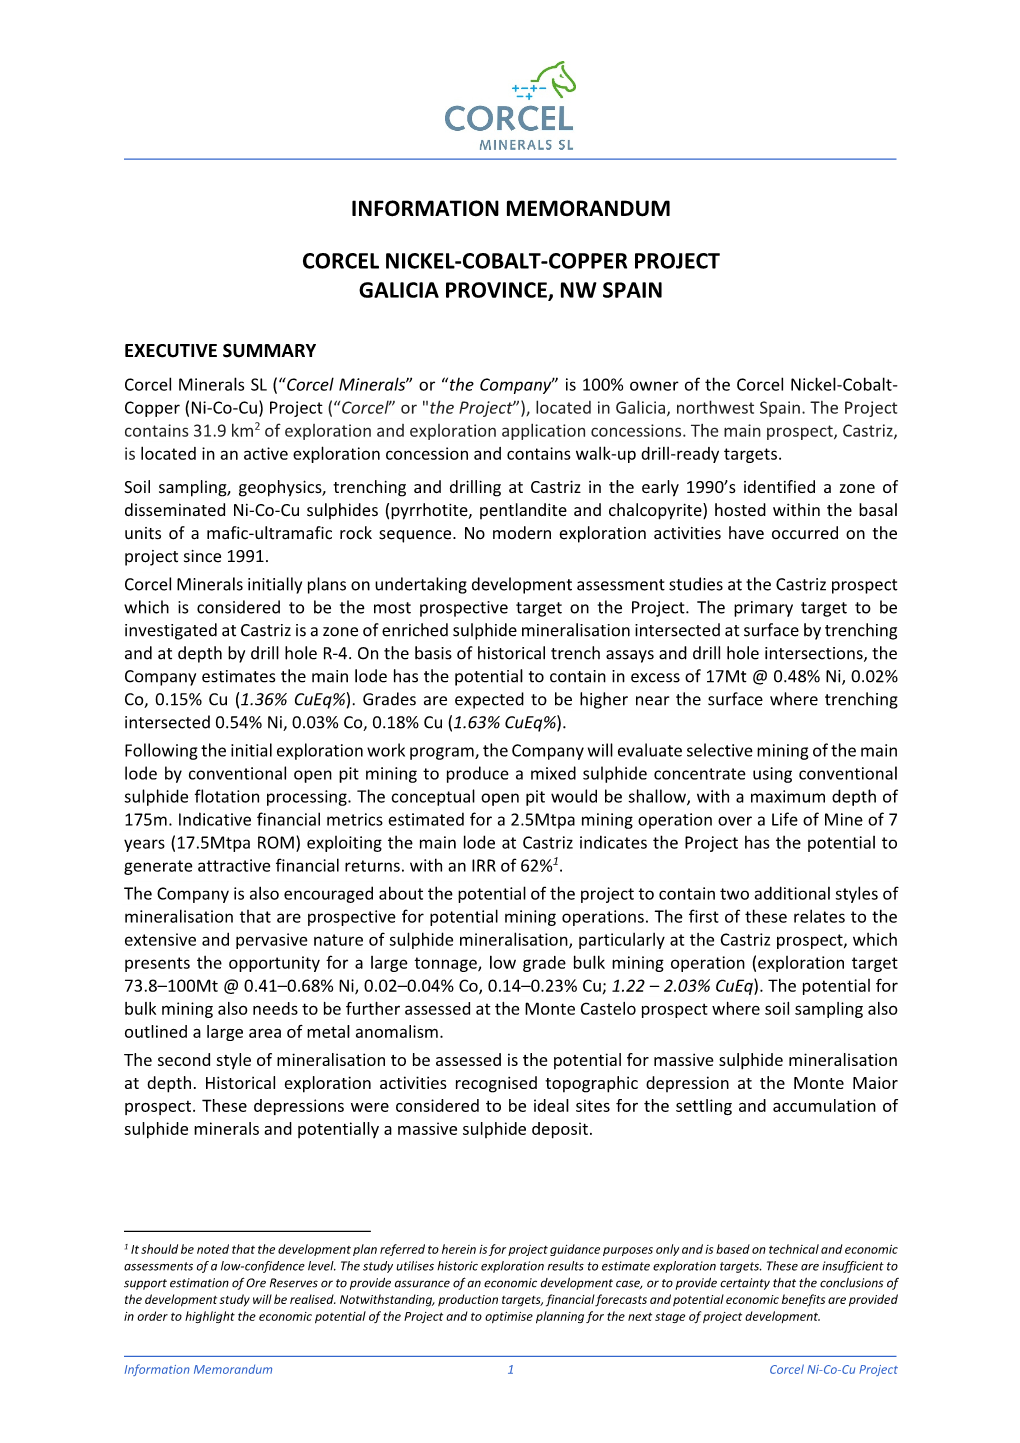 Information Memorandum Corcel Nickel-Cobalt-Copper Project Galicia Province, Nw Spain